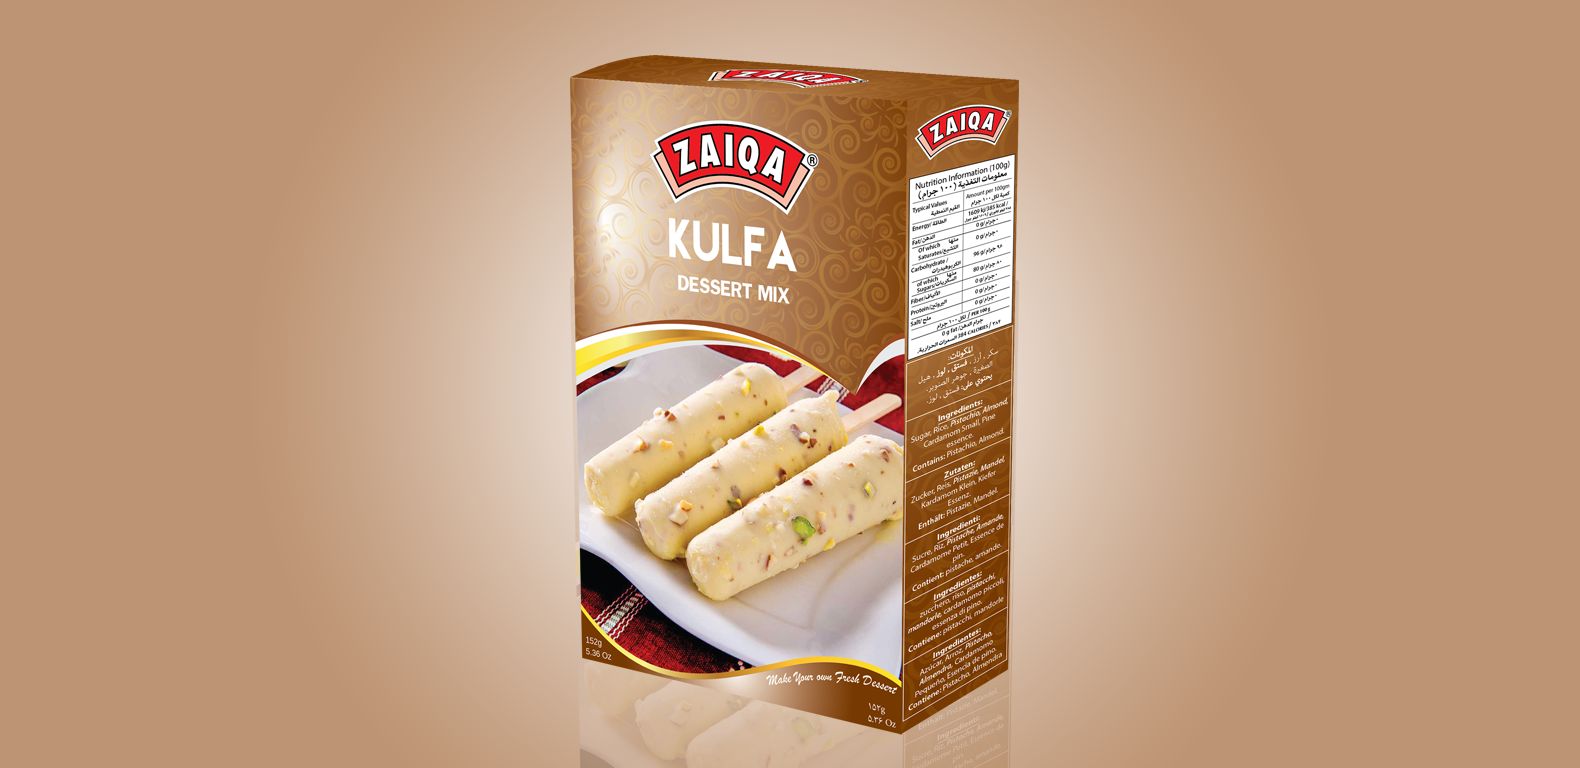 Packaging-Design-Zaiqa-Desserts-Kulfa